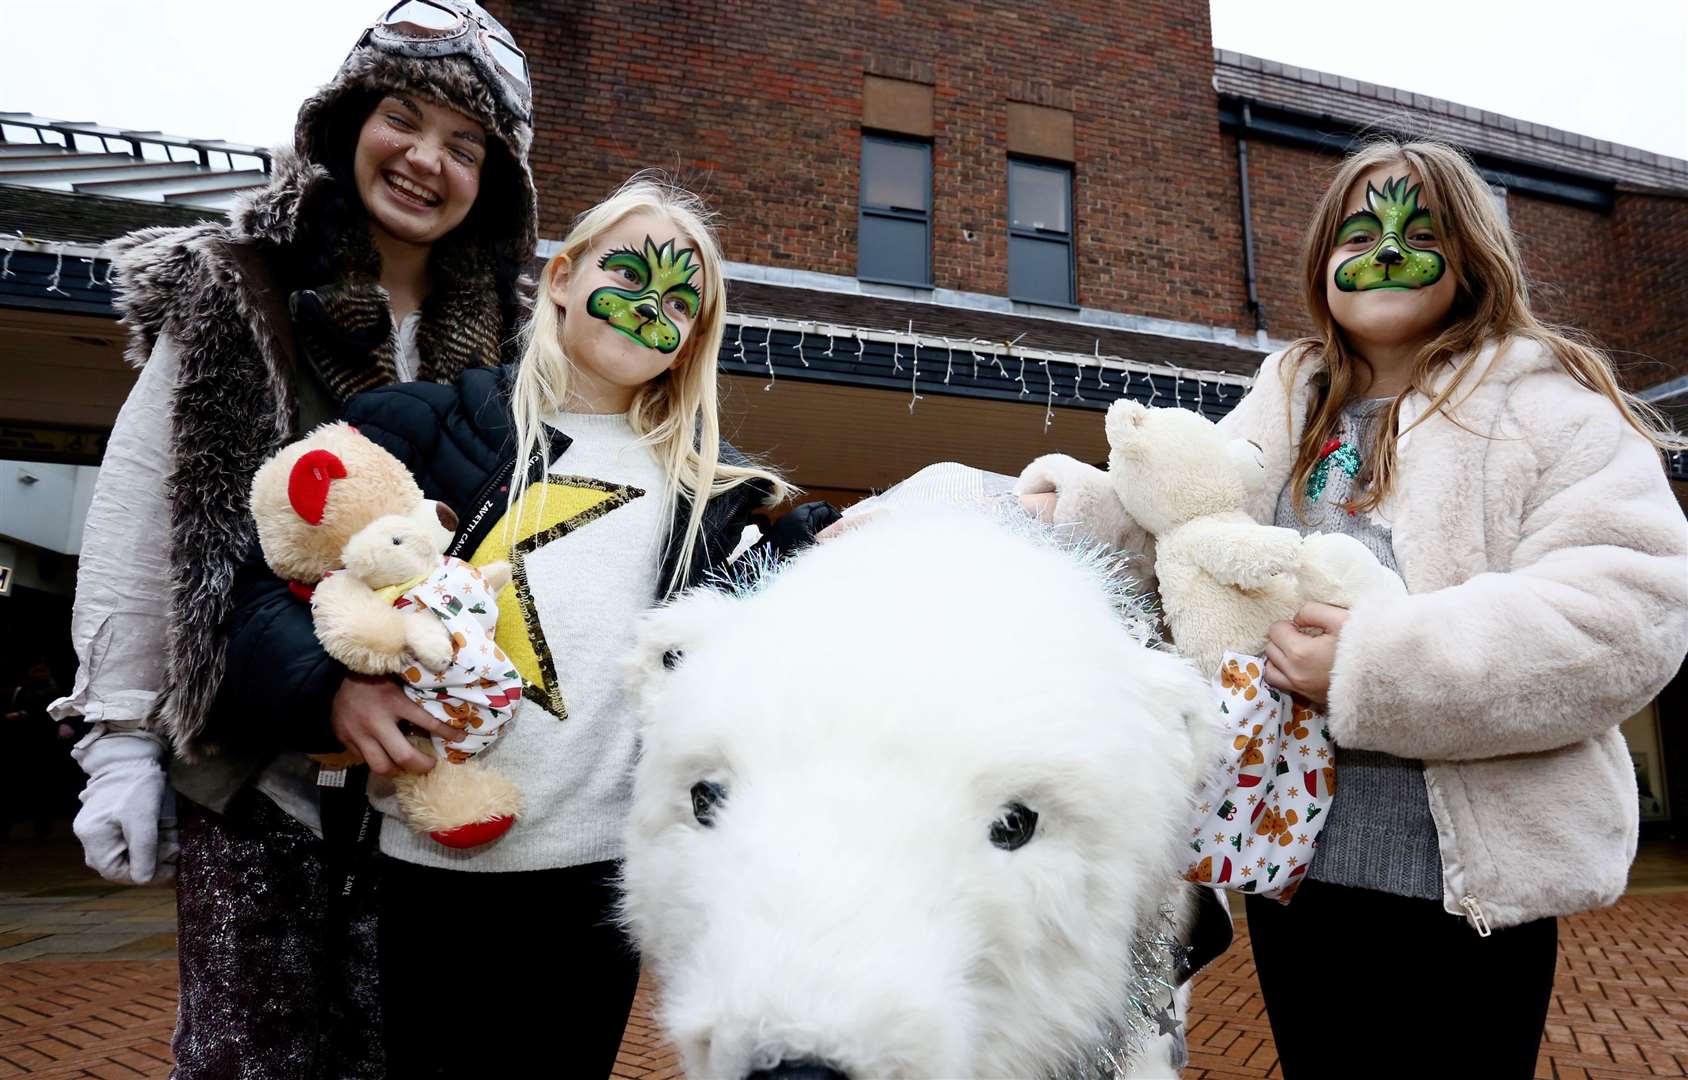 An animatronic polar bear roamed the streets. Picture: Gravesham Borough Council